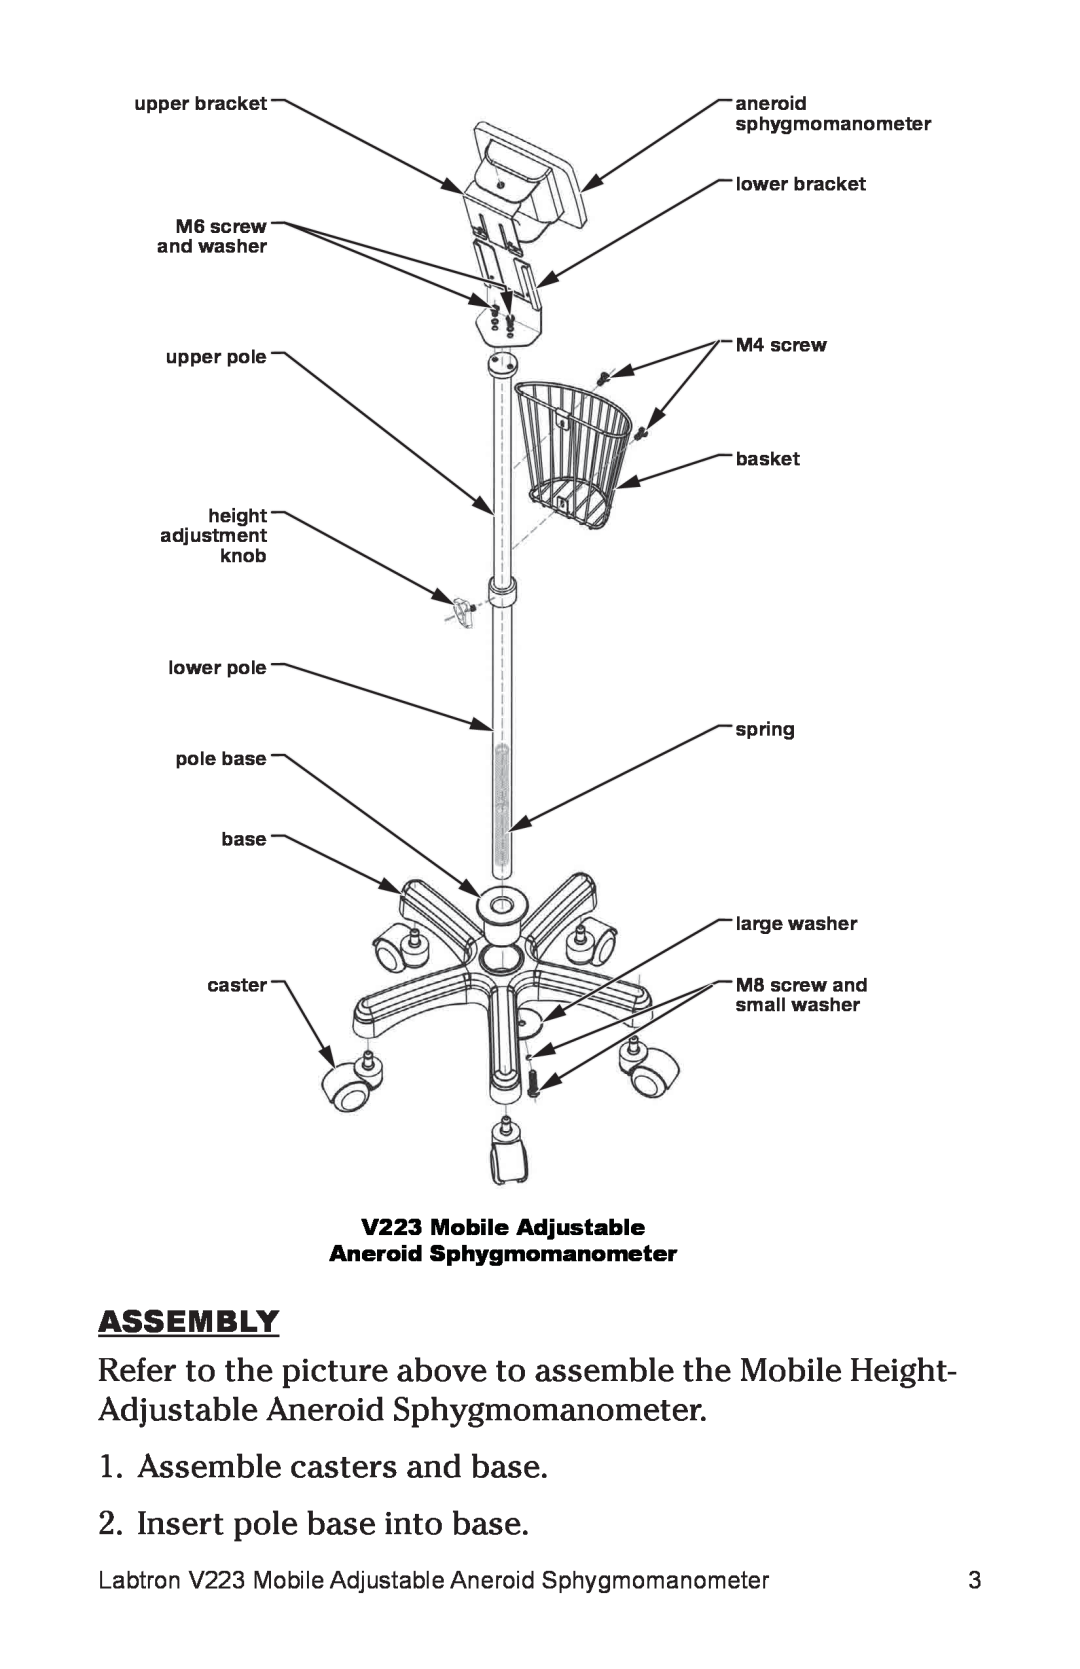 Graham Field Assembly, Labtron V223 Mobile Adjustable Aneroid Sphygmomanometer, lower pole pole base base caster 